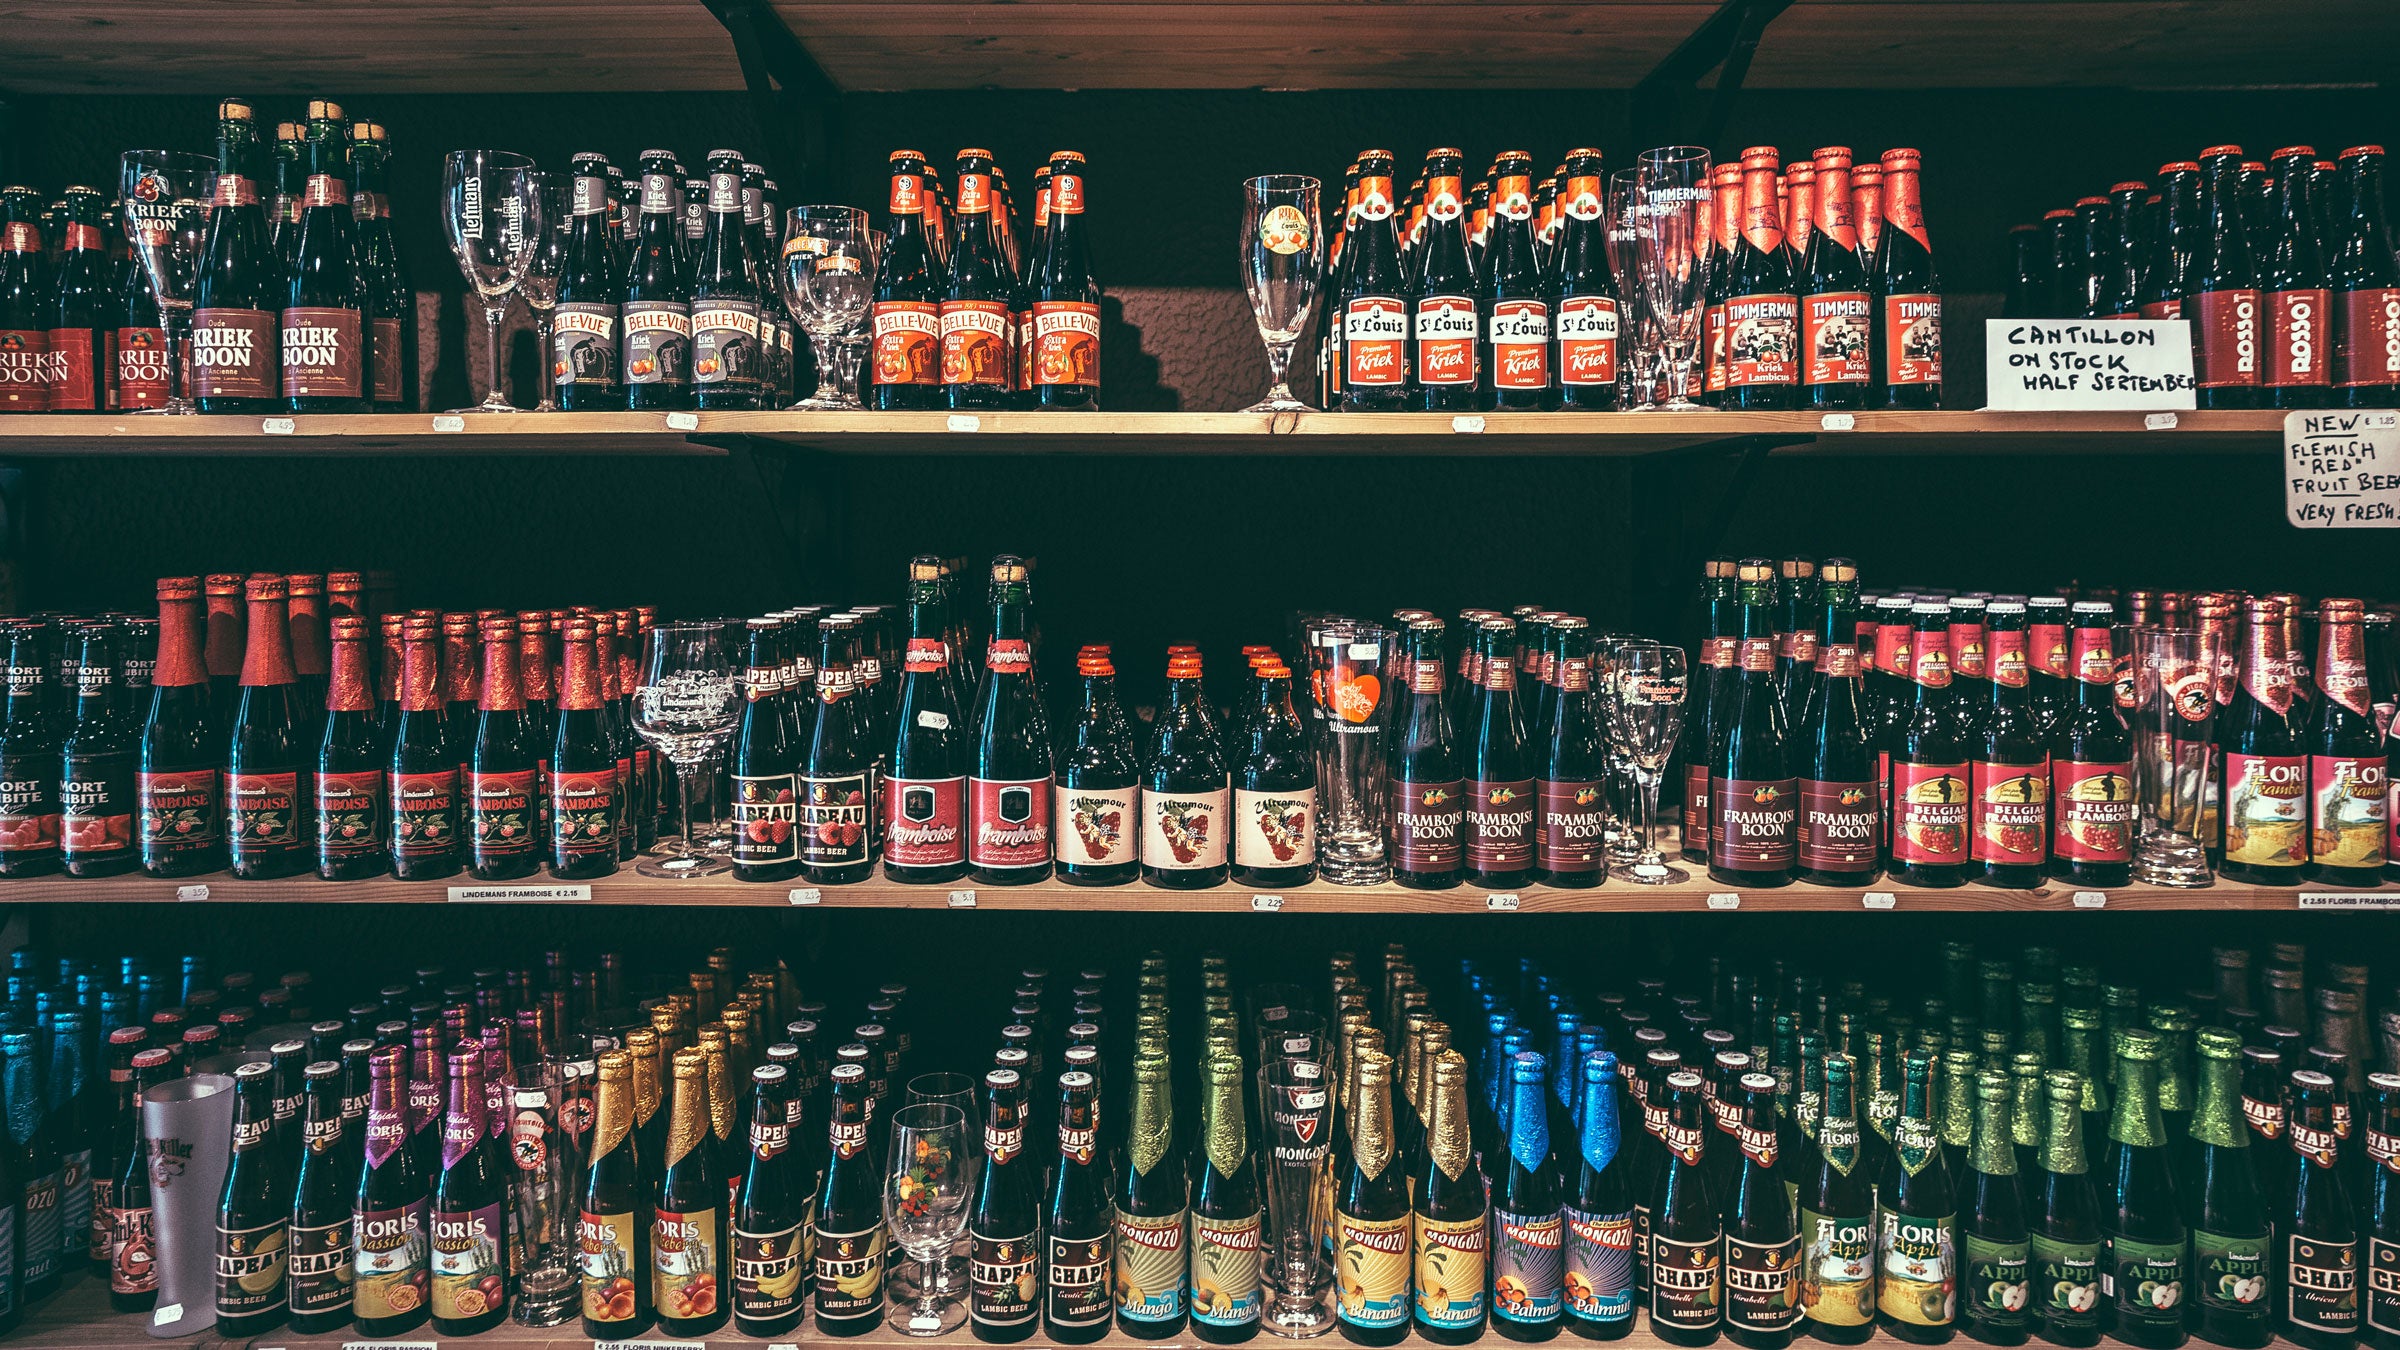 https://cdn.outsideonline.com/wp-content/uploads/2018/07/16/belgium-beers-shelf_h.jpg